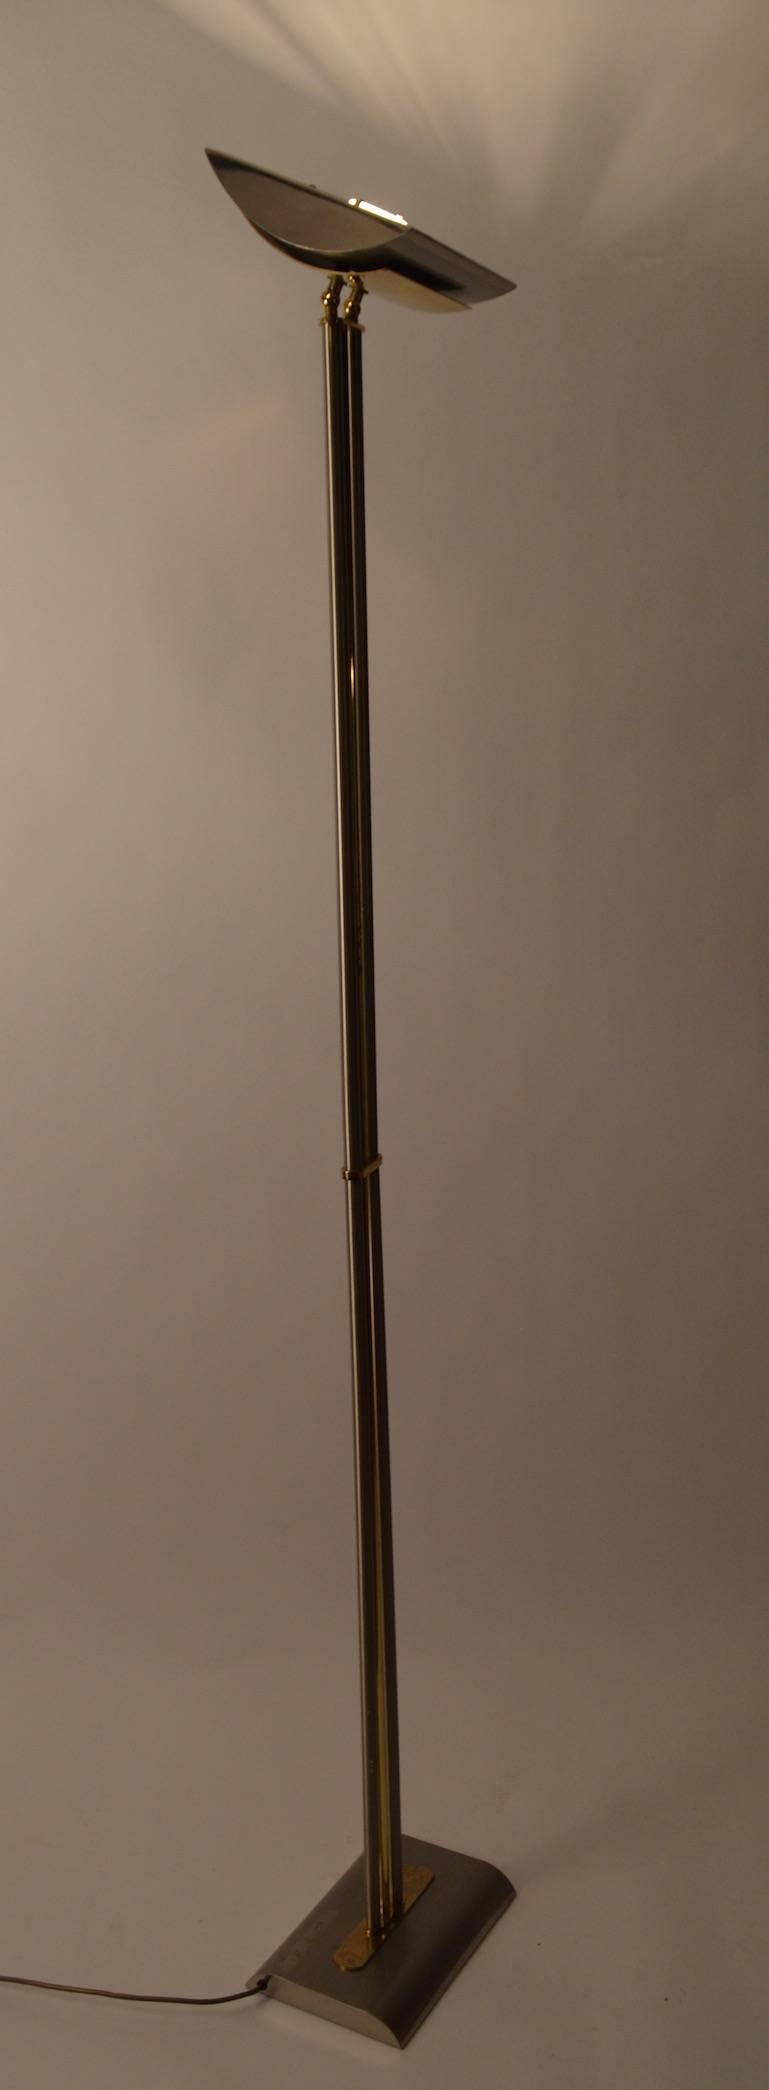 Italian Made Halogen Floor Lamp Torchiere Brass and Steel 2